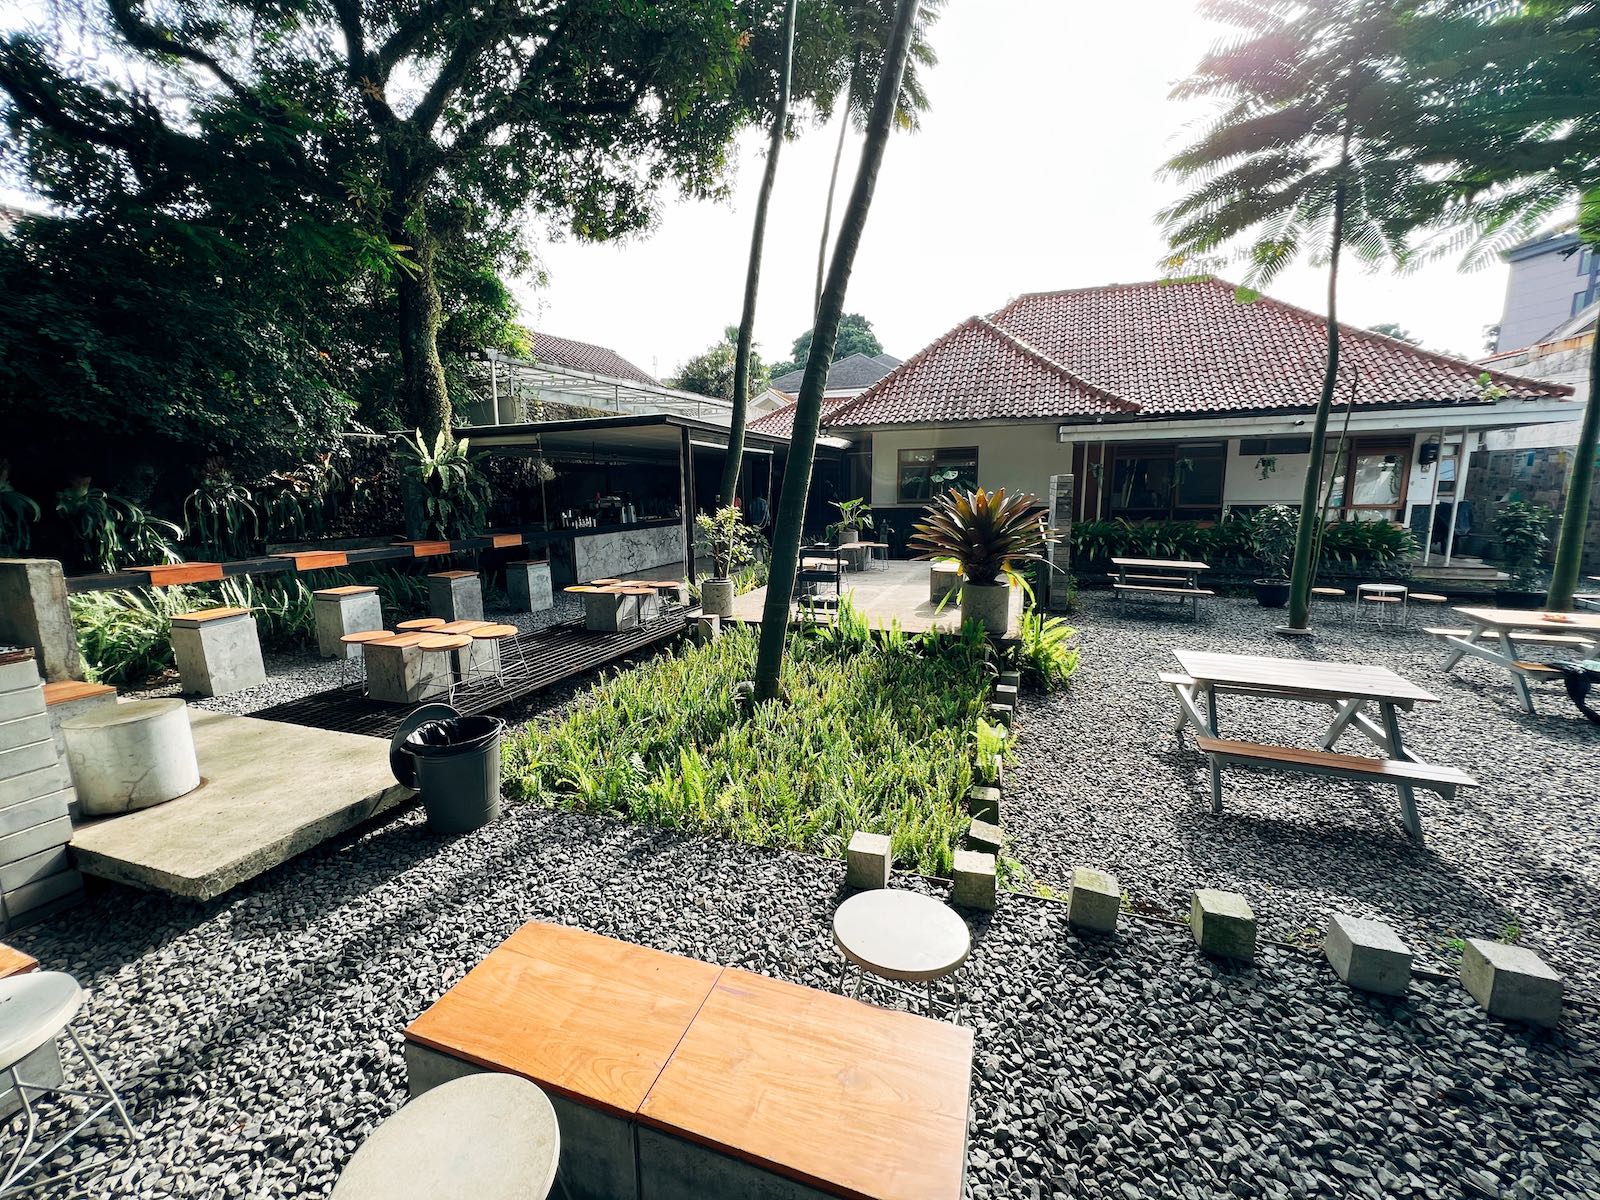 Bandung Cafes Kilogram Outdoor